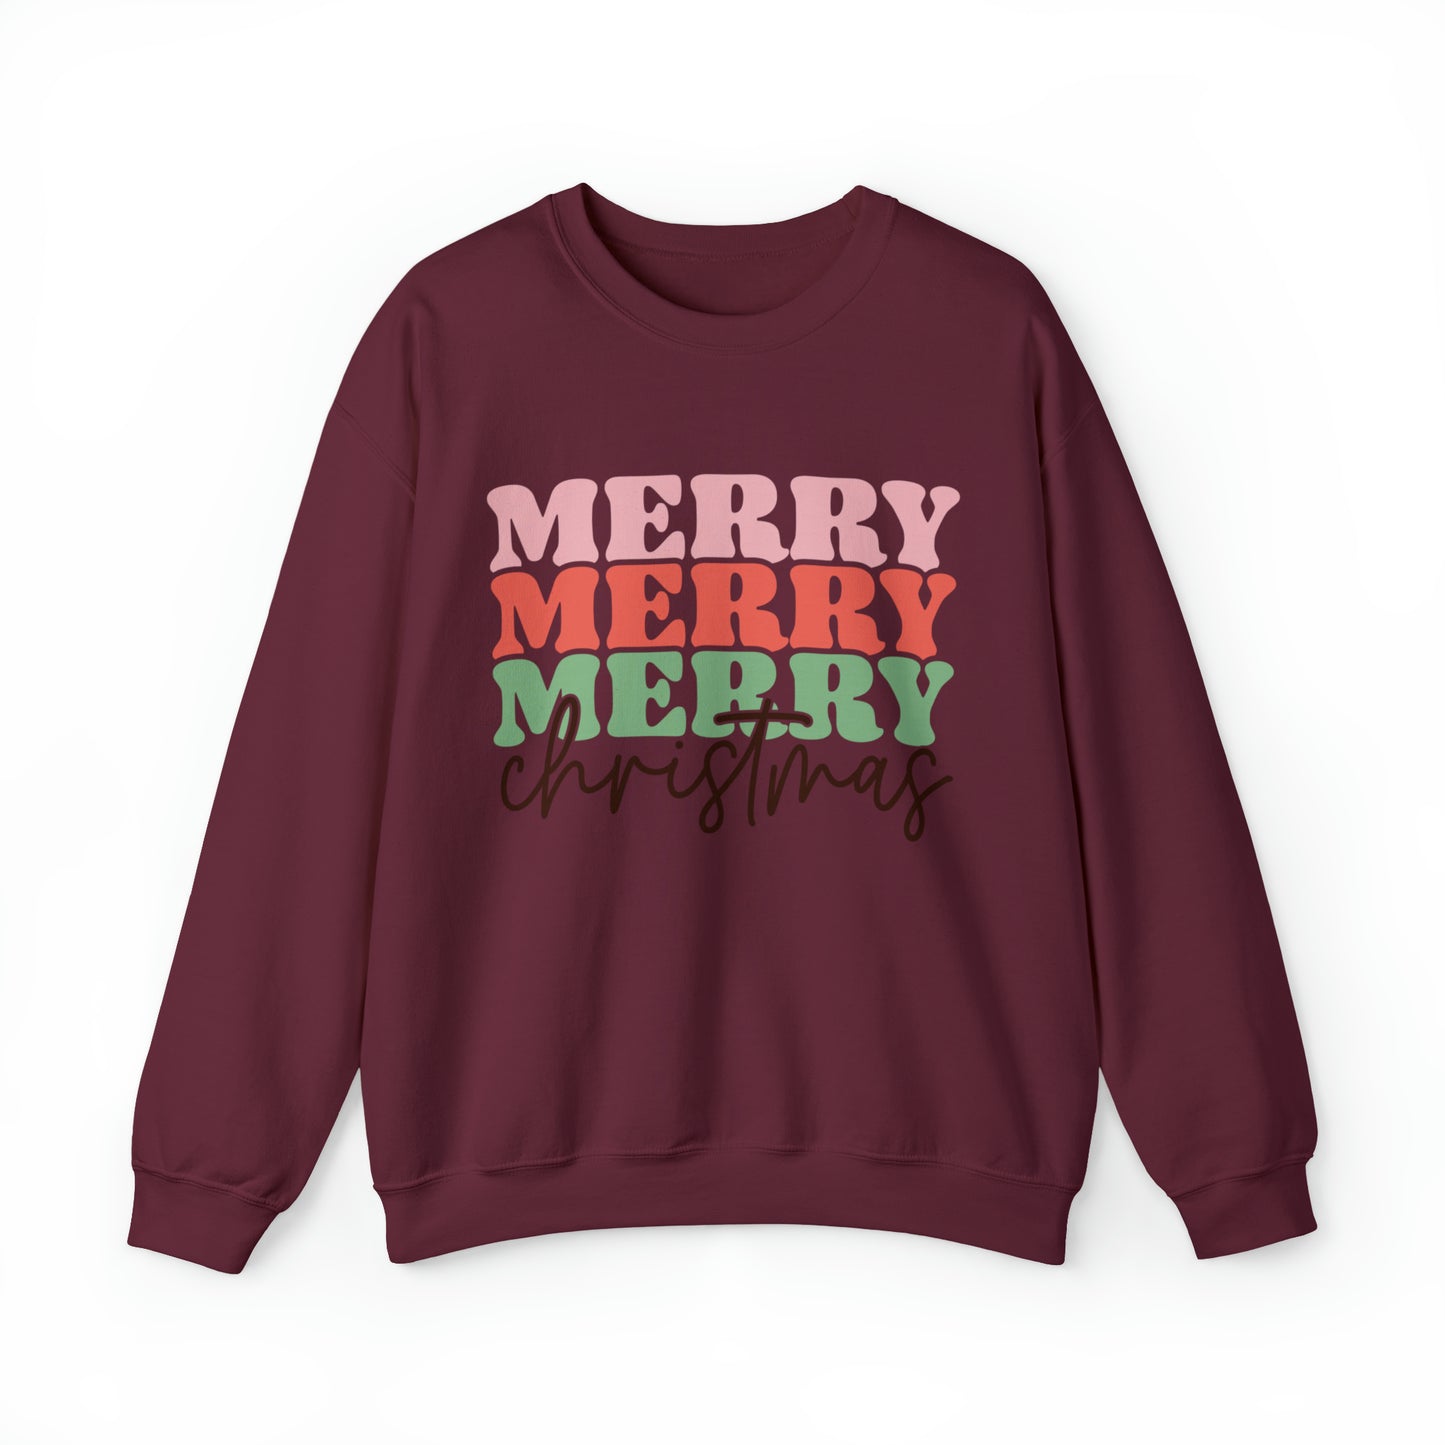 Merry Merry Merry Christmas Women's Crewneck Sweatshirt